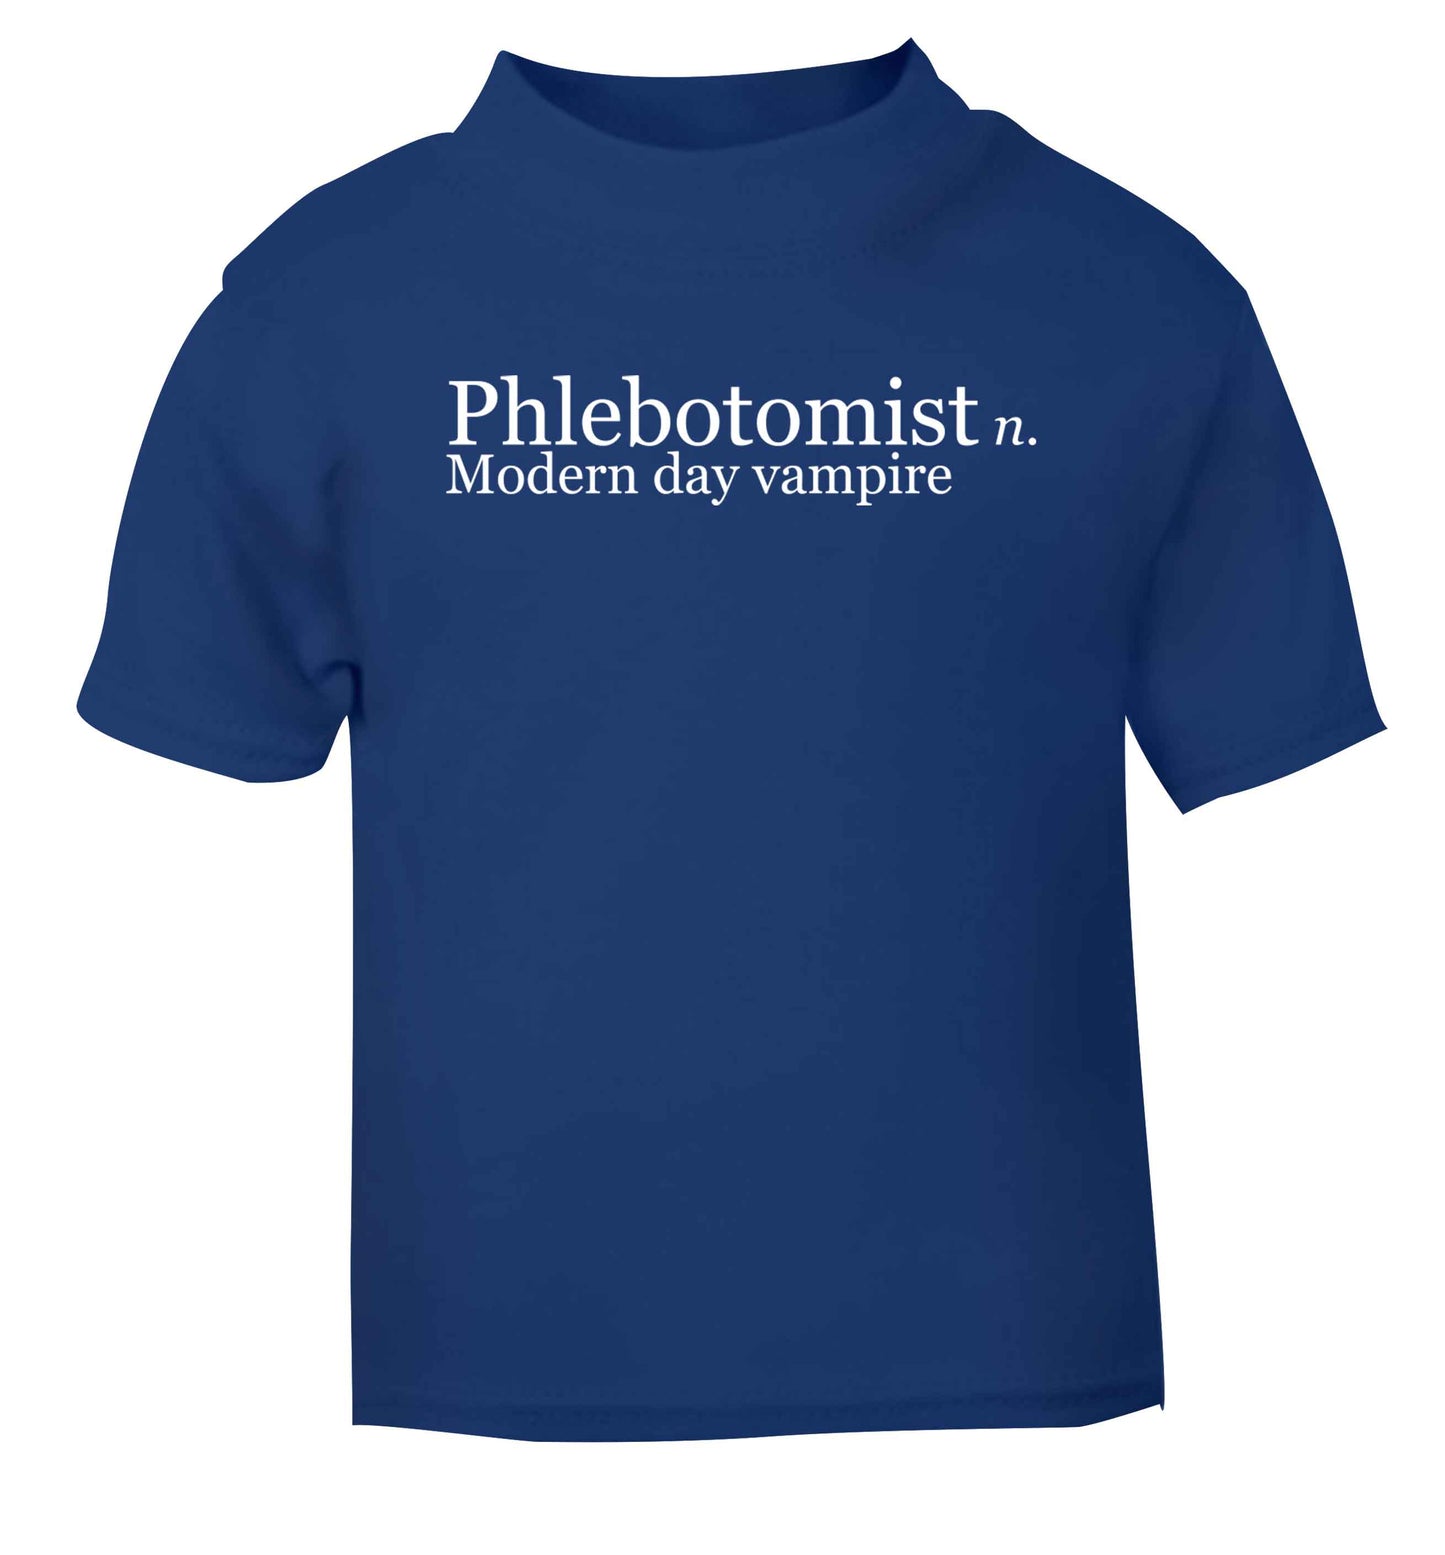 Phlebotomist - Modern day vampire blue baby toddler Tshirt 2 Years